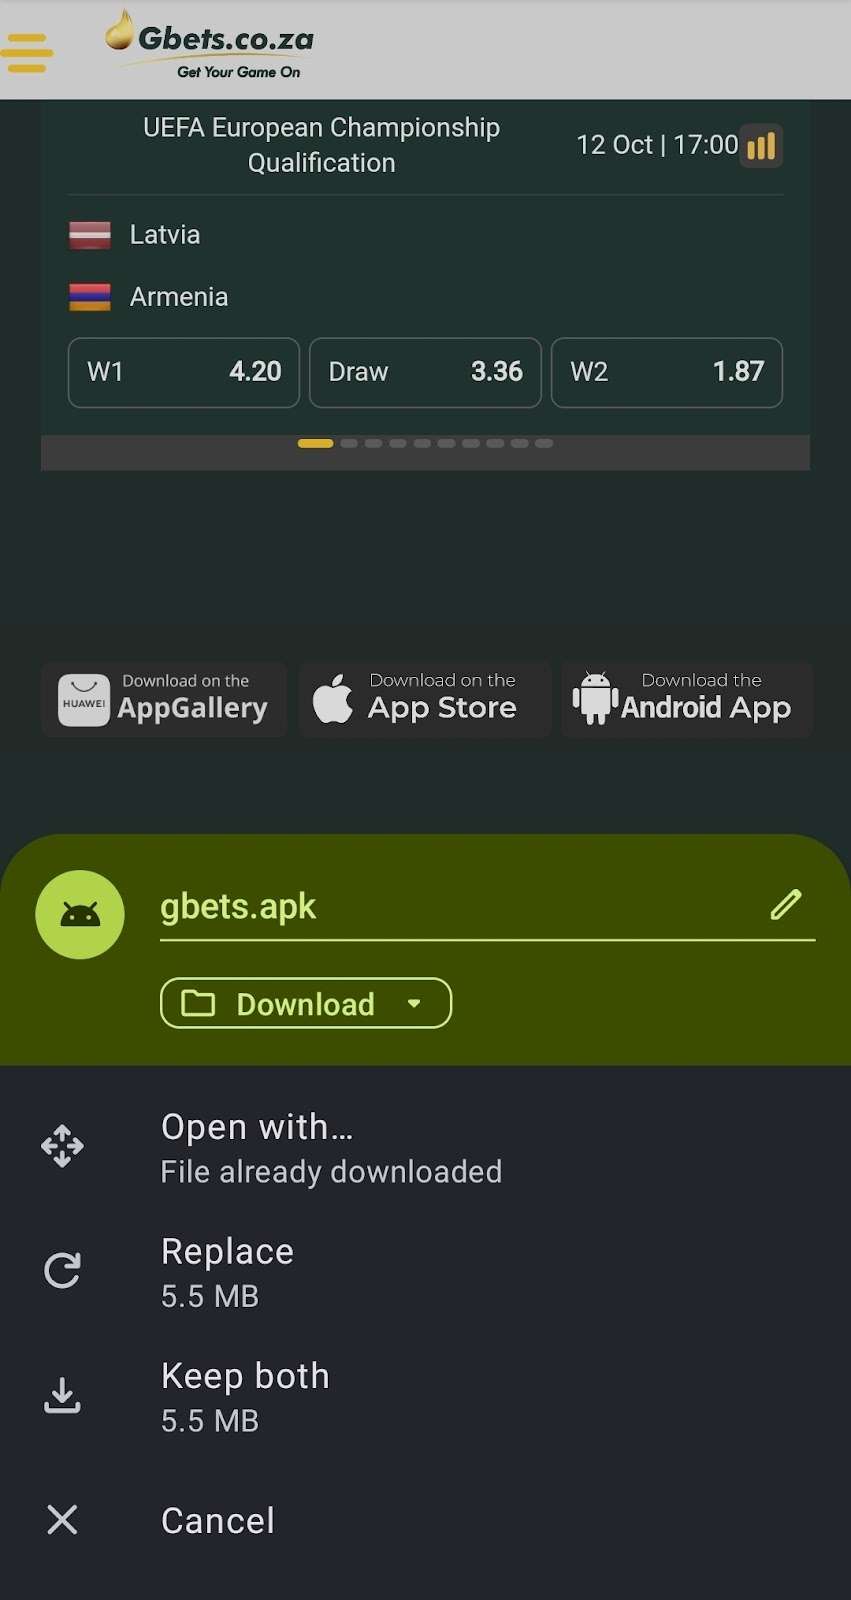 gbets app download process 3